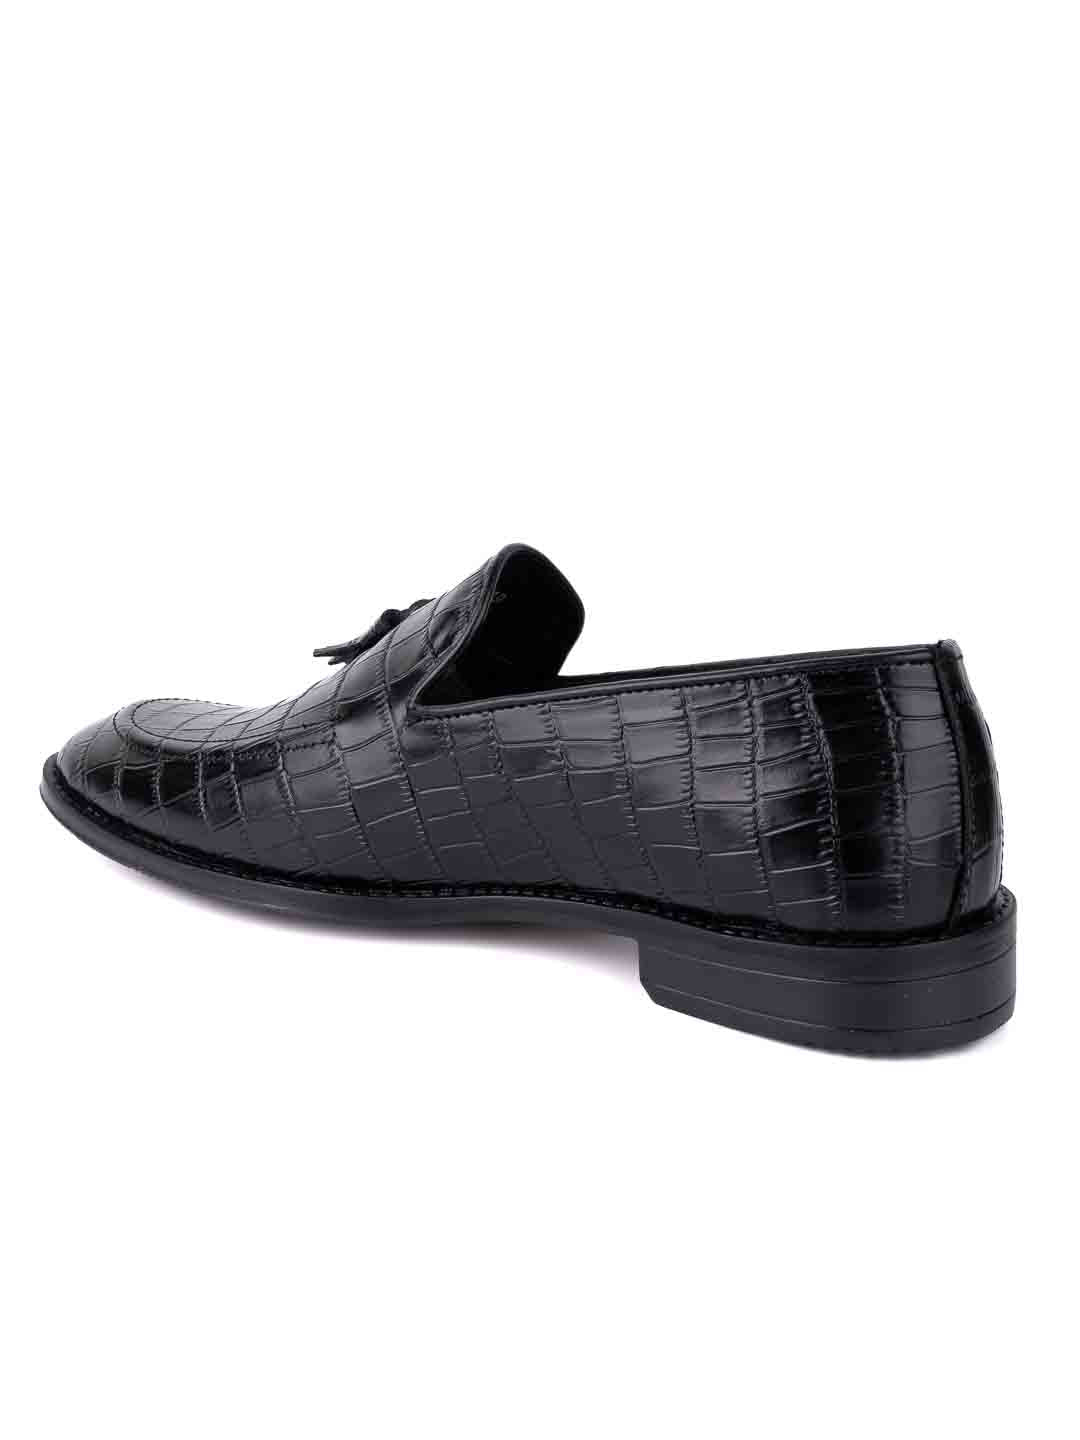  Footwear, Men Footwear, Black Formal Loafers